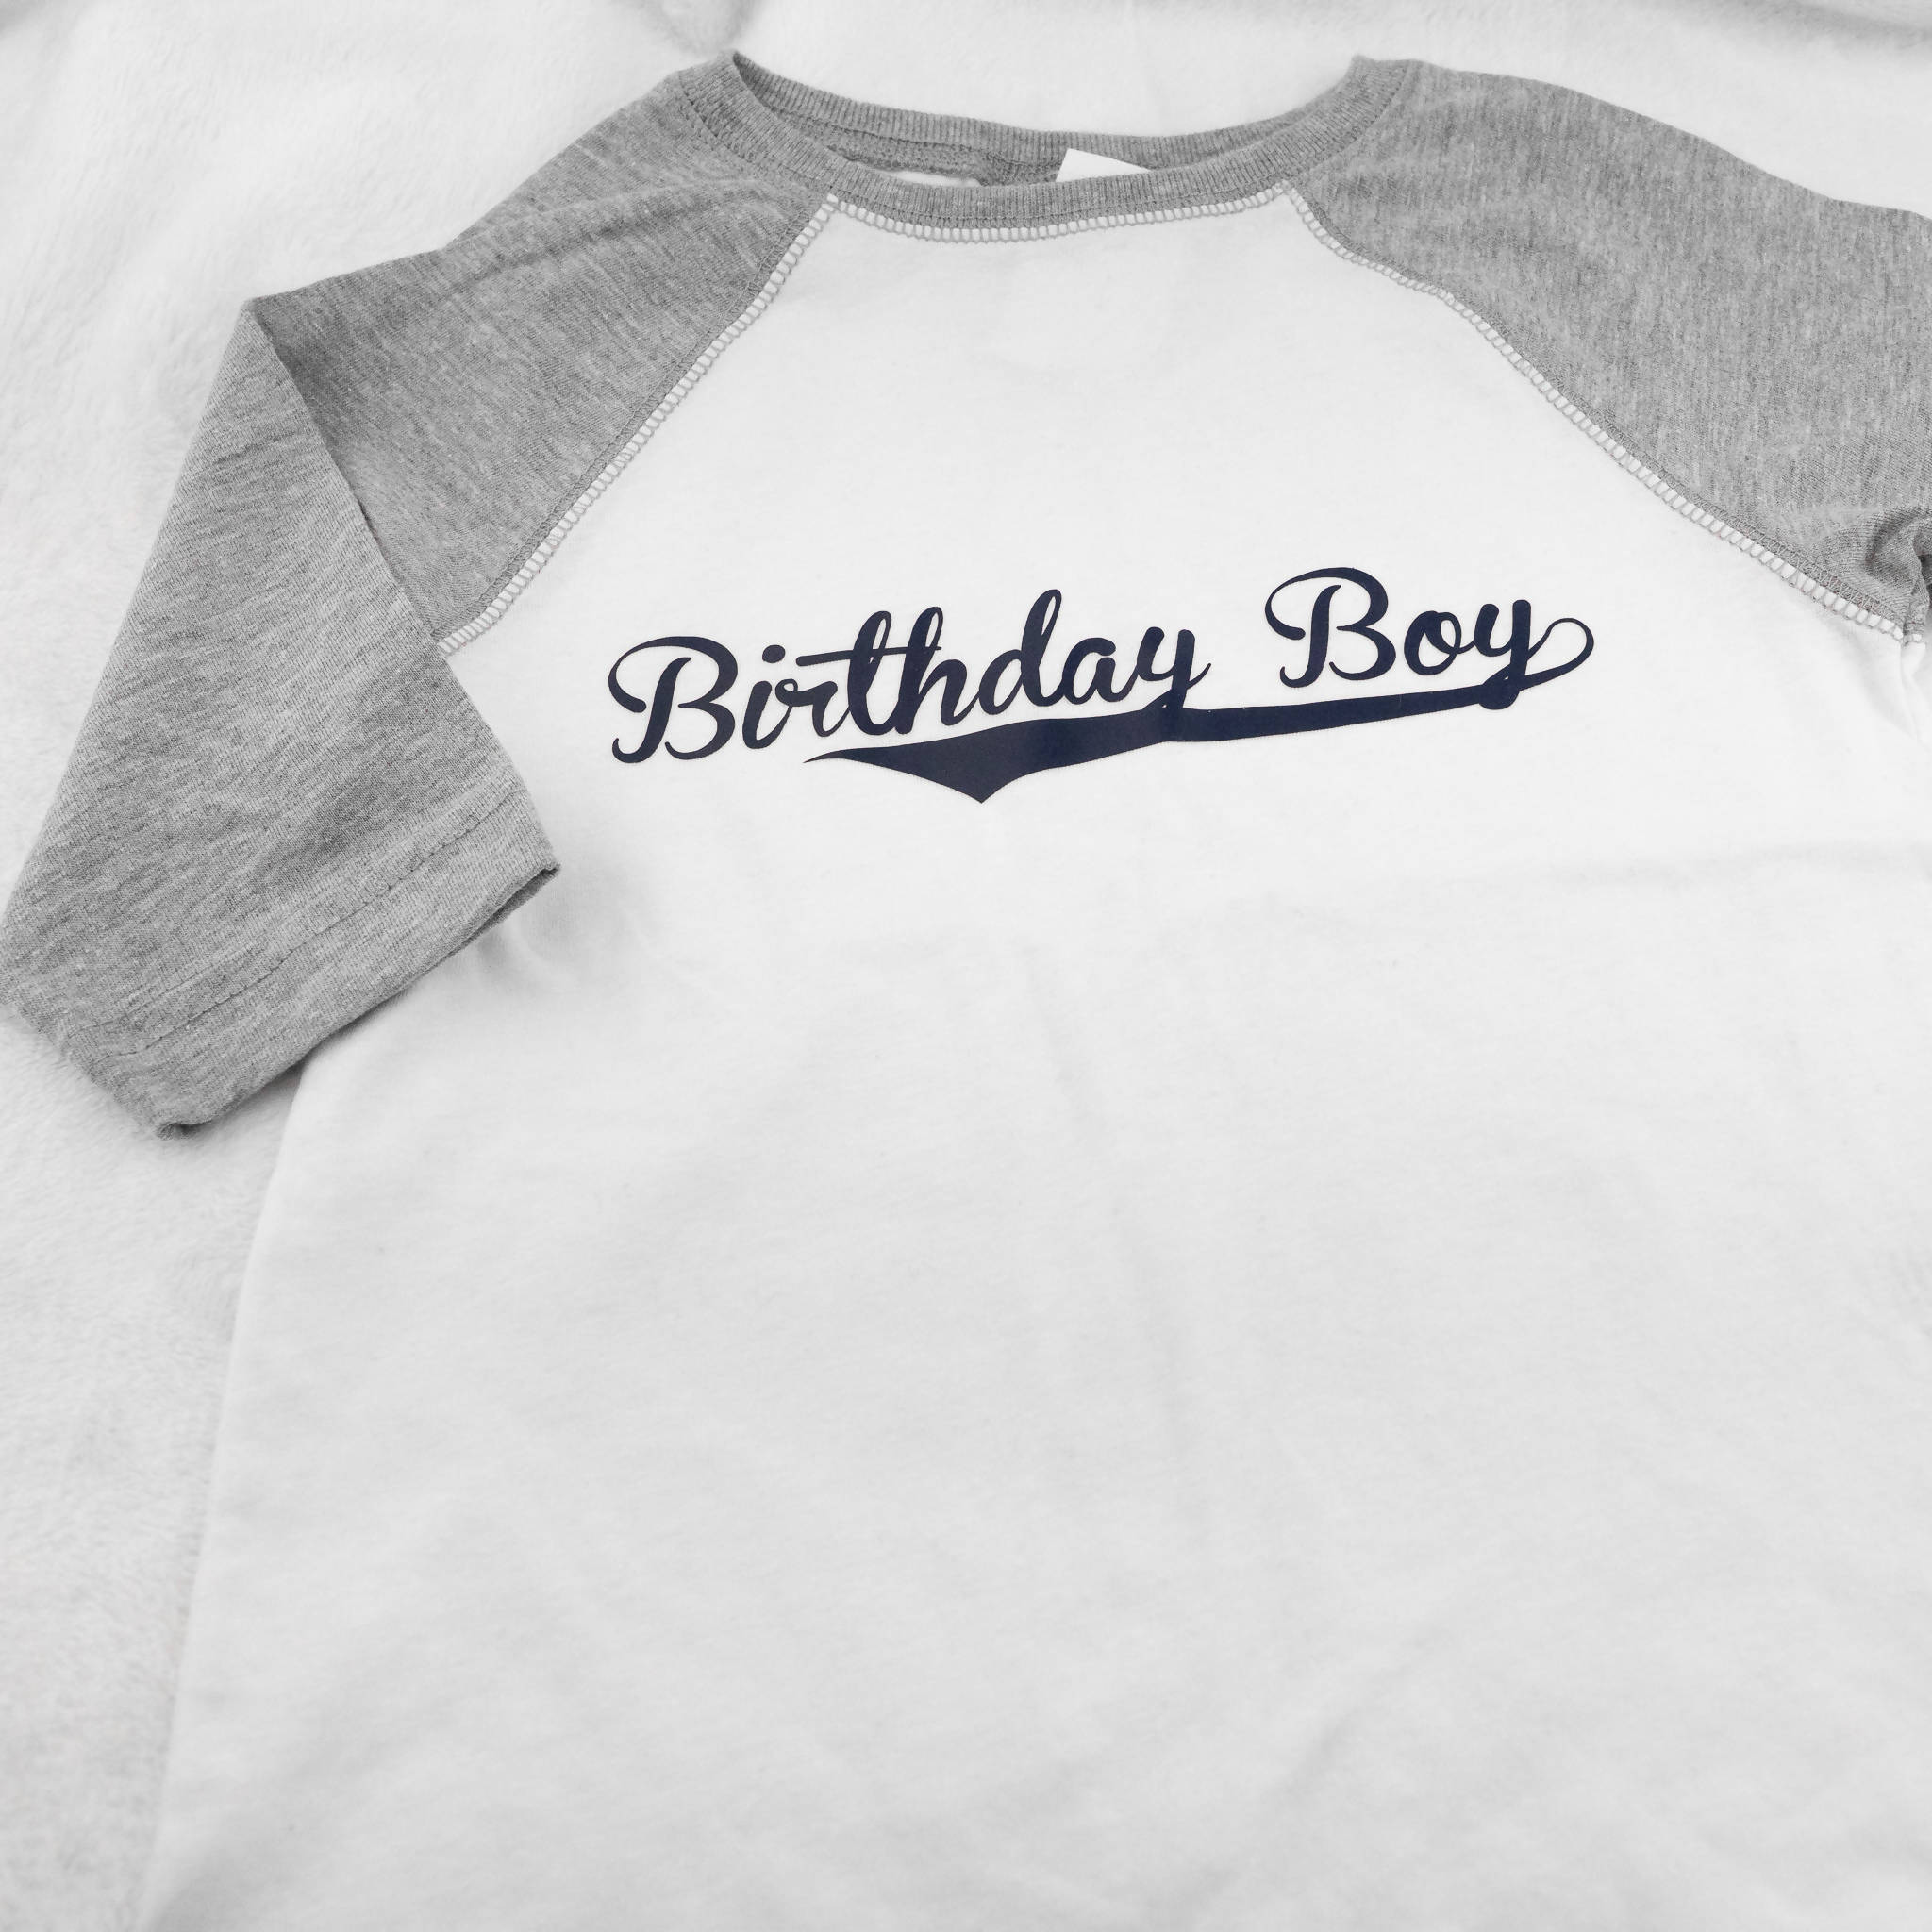 Birthday Boy Baseball themed raglan shirt